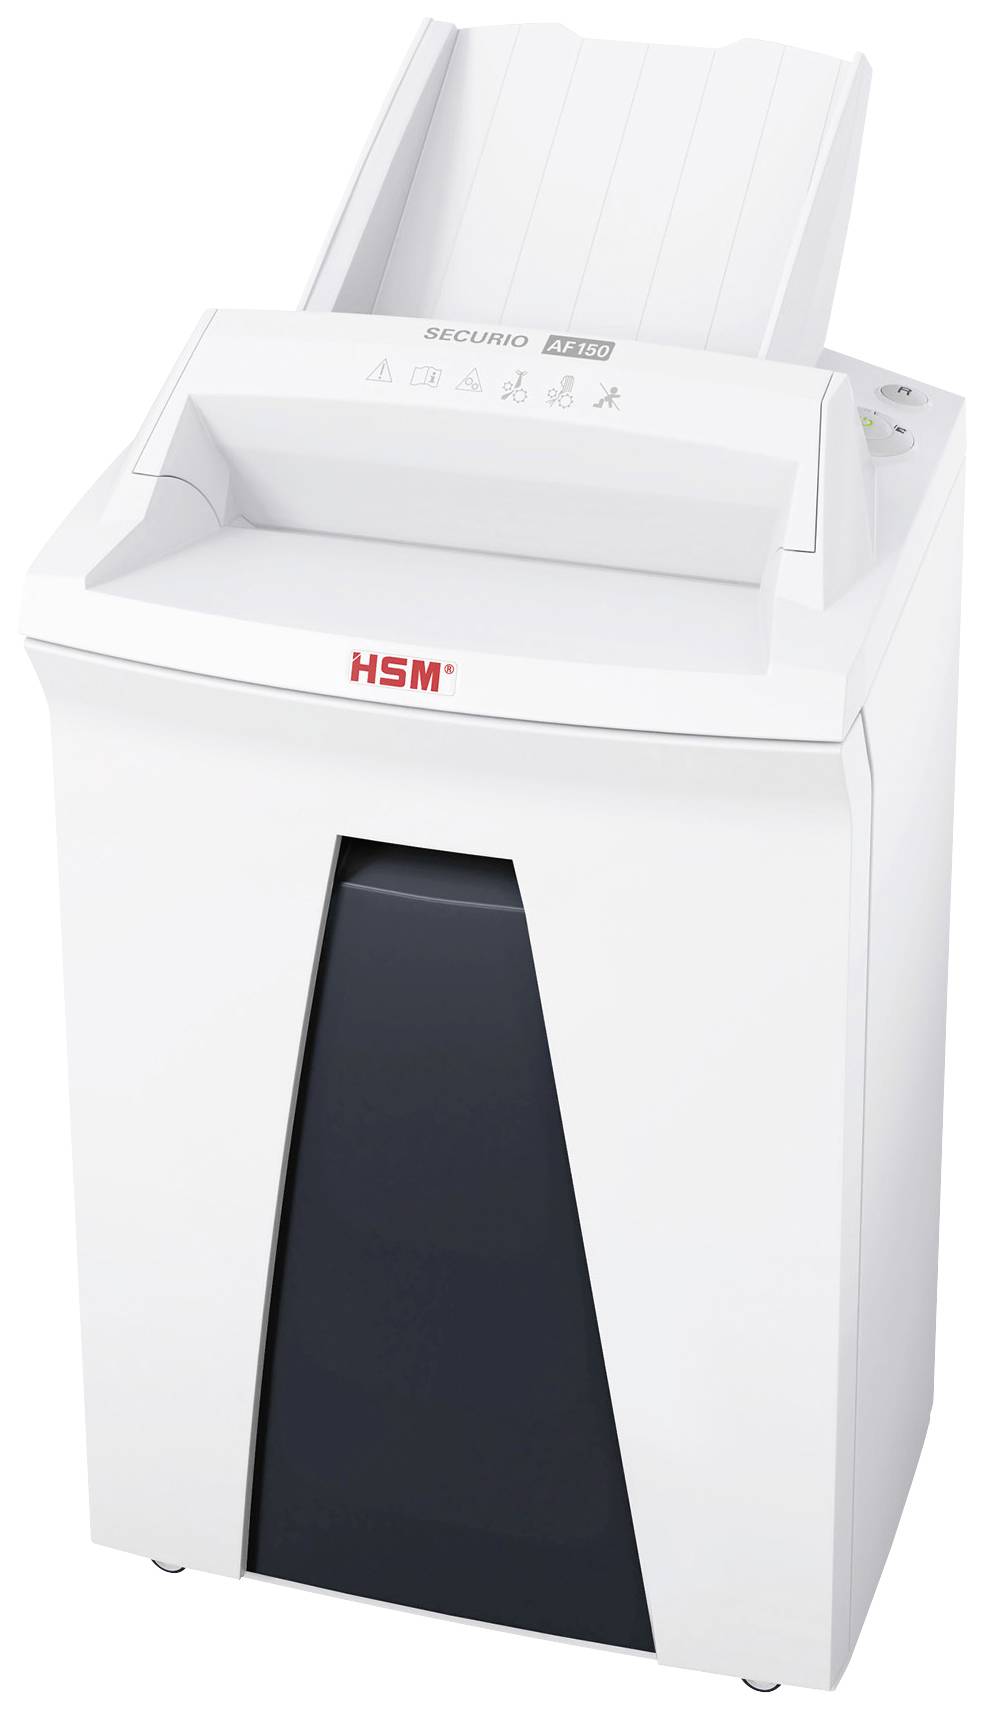 HSM Autofeed-Aktenvernichter HSM SECURIO AF150, Partikelschnitt 4,5 x 30 mm Aktenvernichter HSM SECU